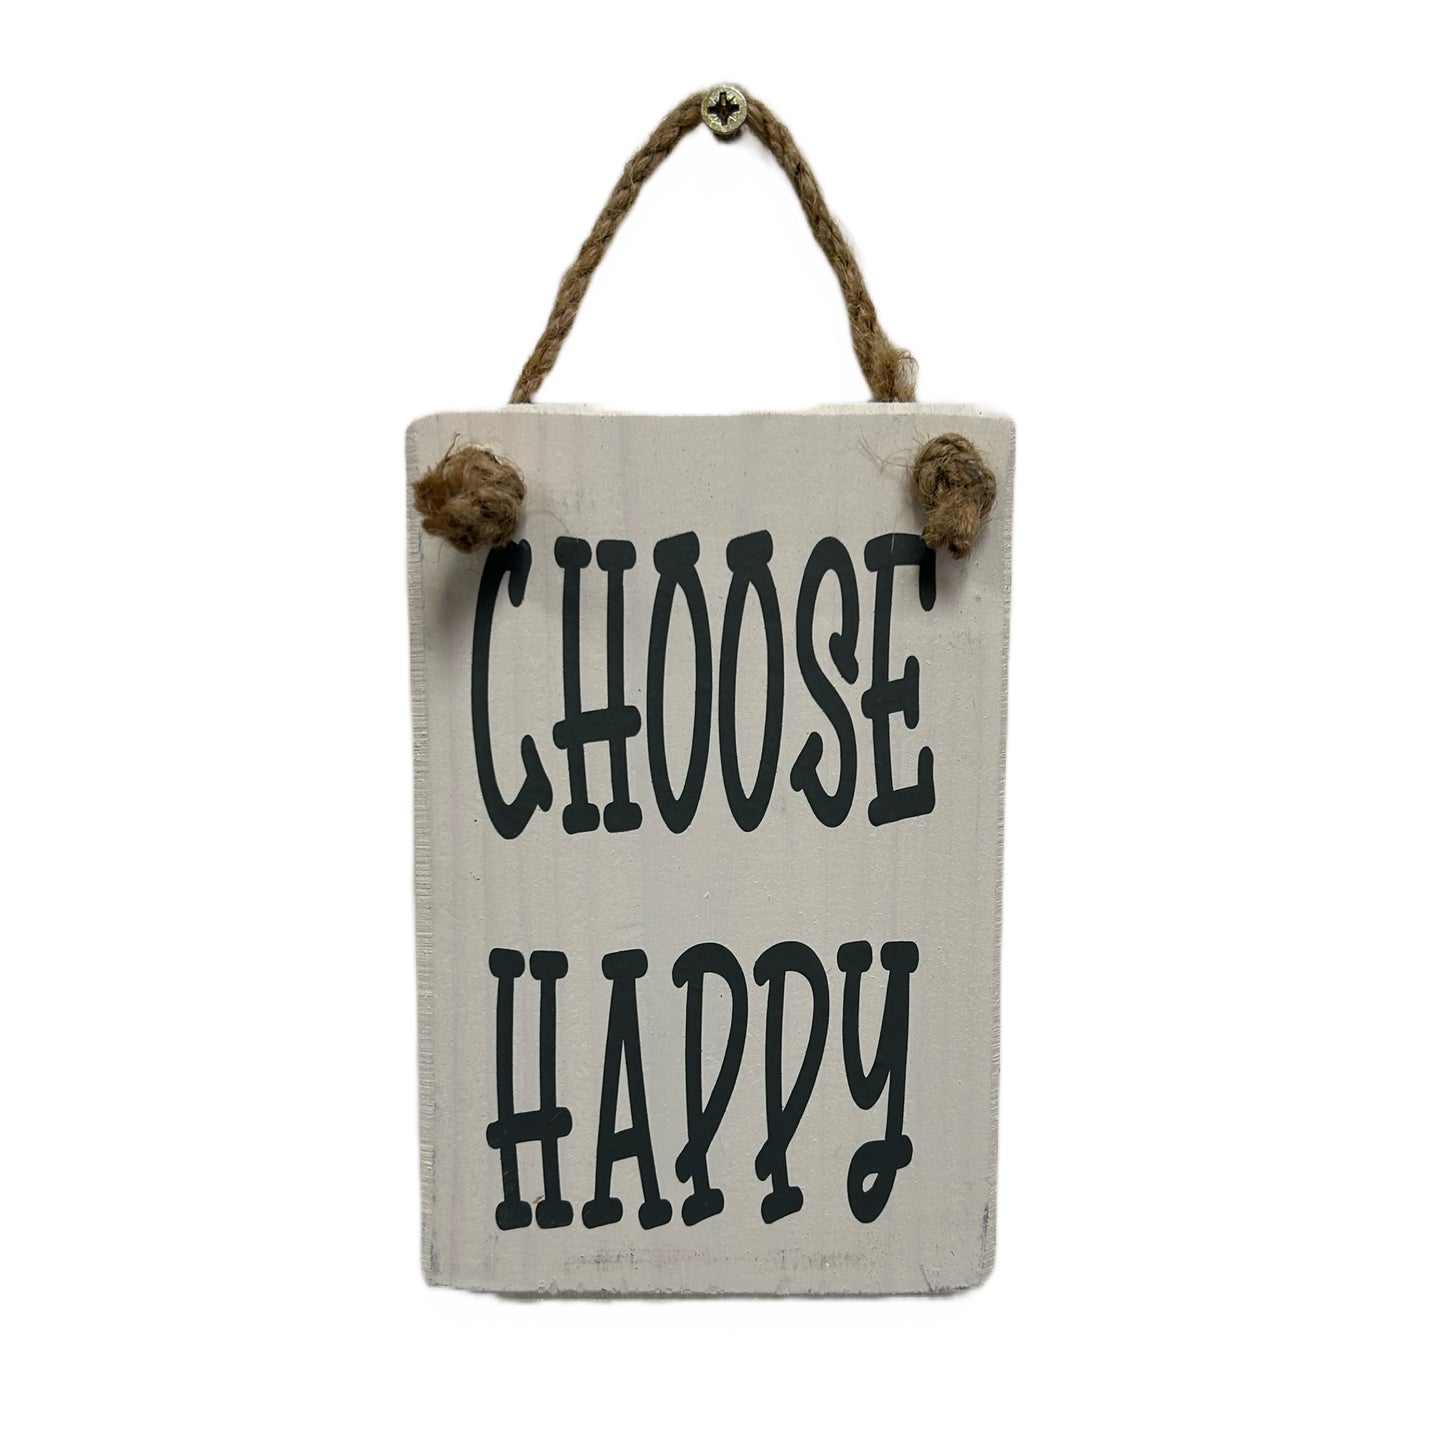 Choose happy!